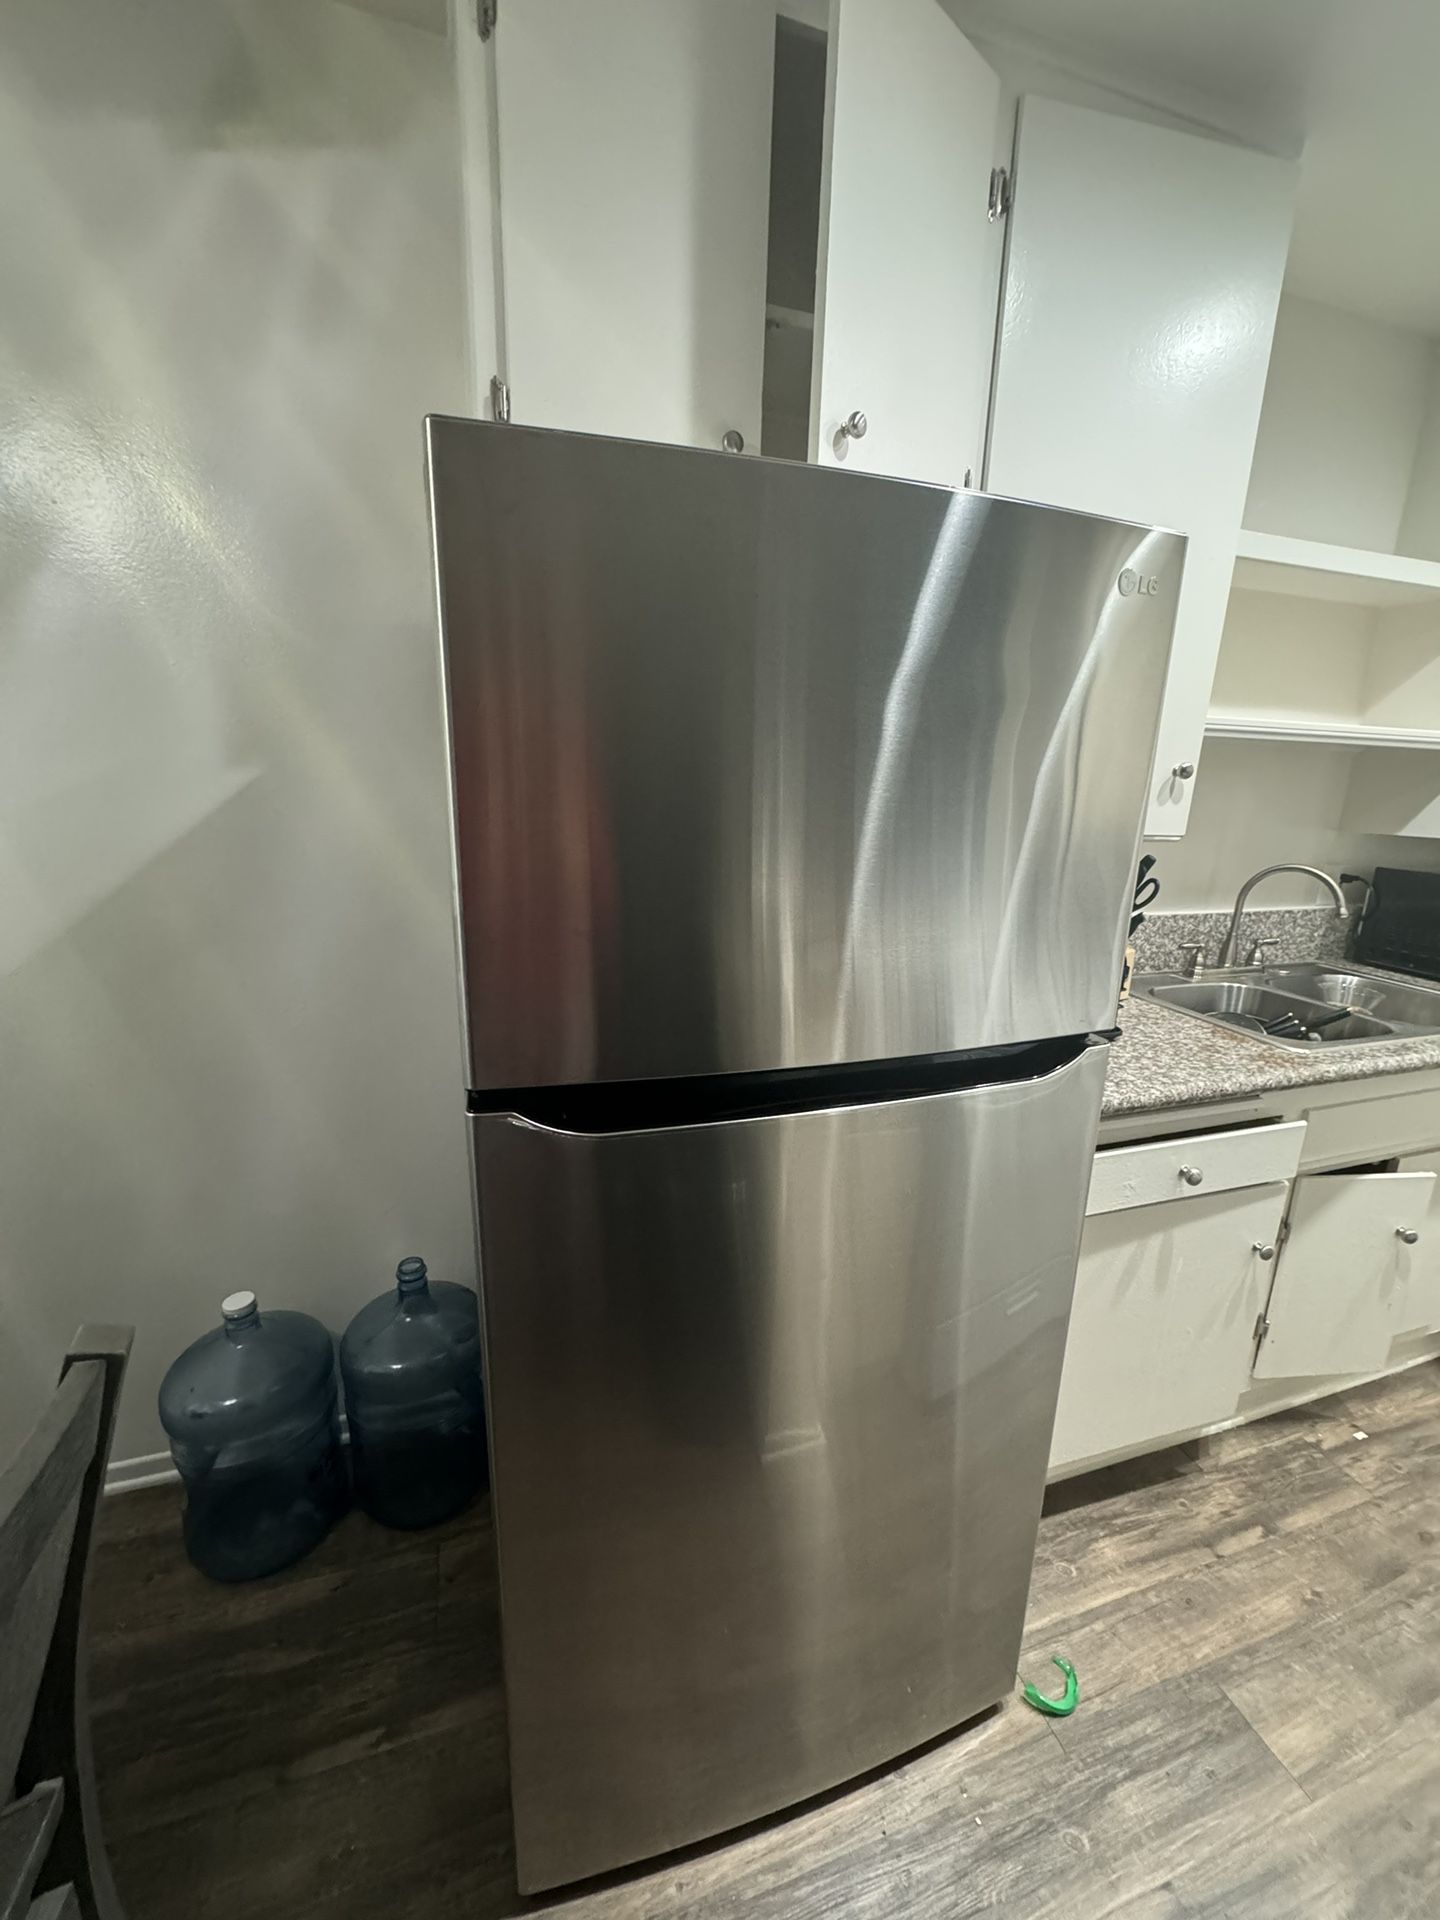 30 in. W 20 cu. ft. Top Freezer Refrigerator w/ Multi-Air Flow and Reversible Door in Stainless Steel,ENERGY STAR